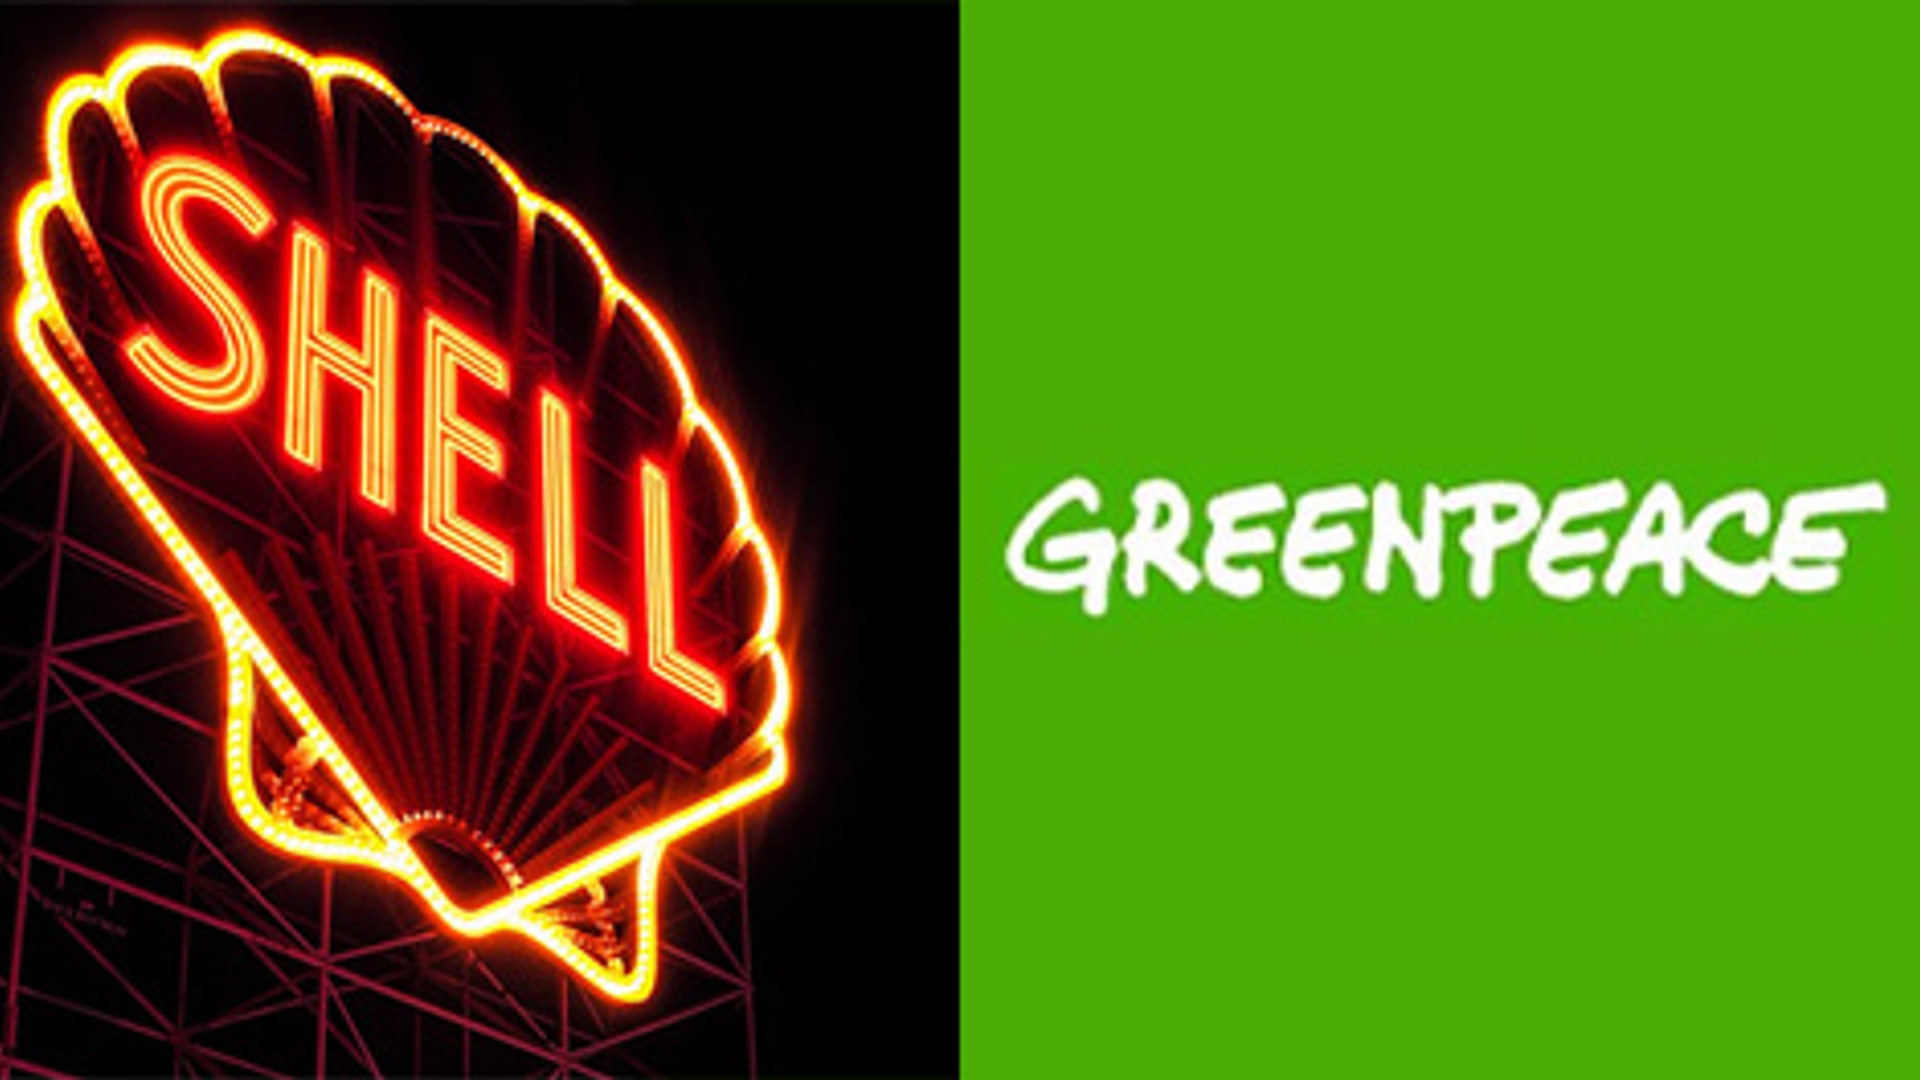 shell vs greenpeace